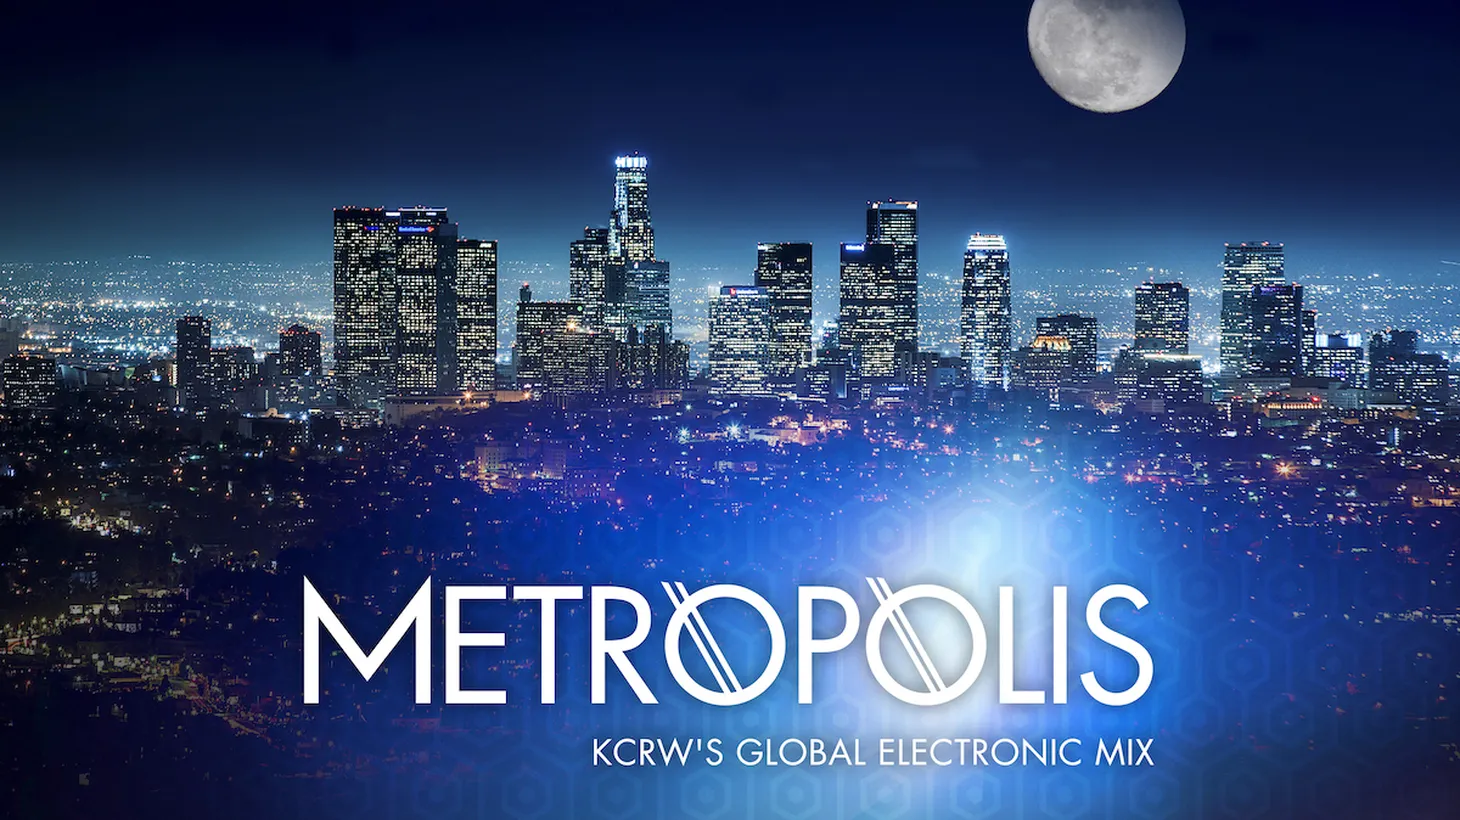 Metropolis playlist, April 9, 2022.